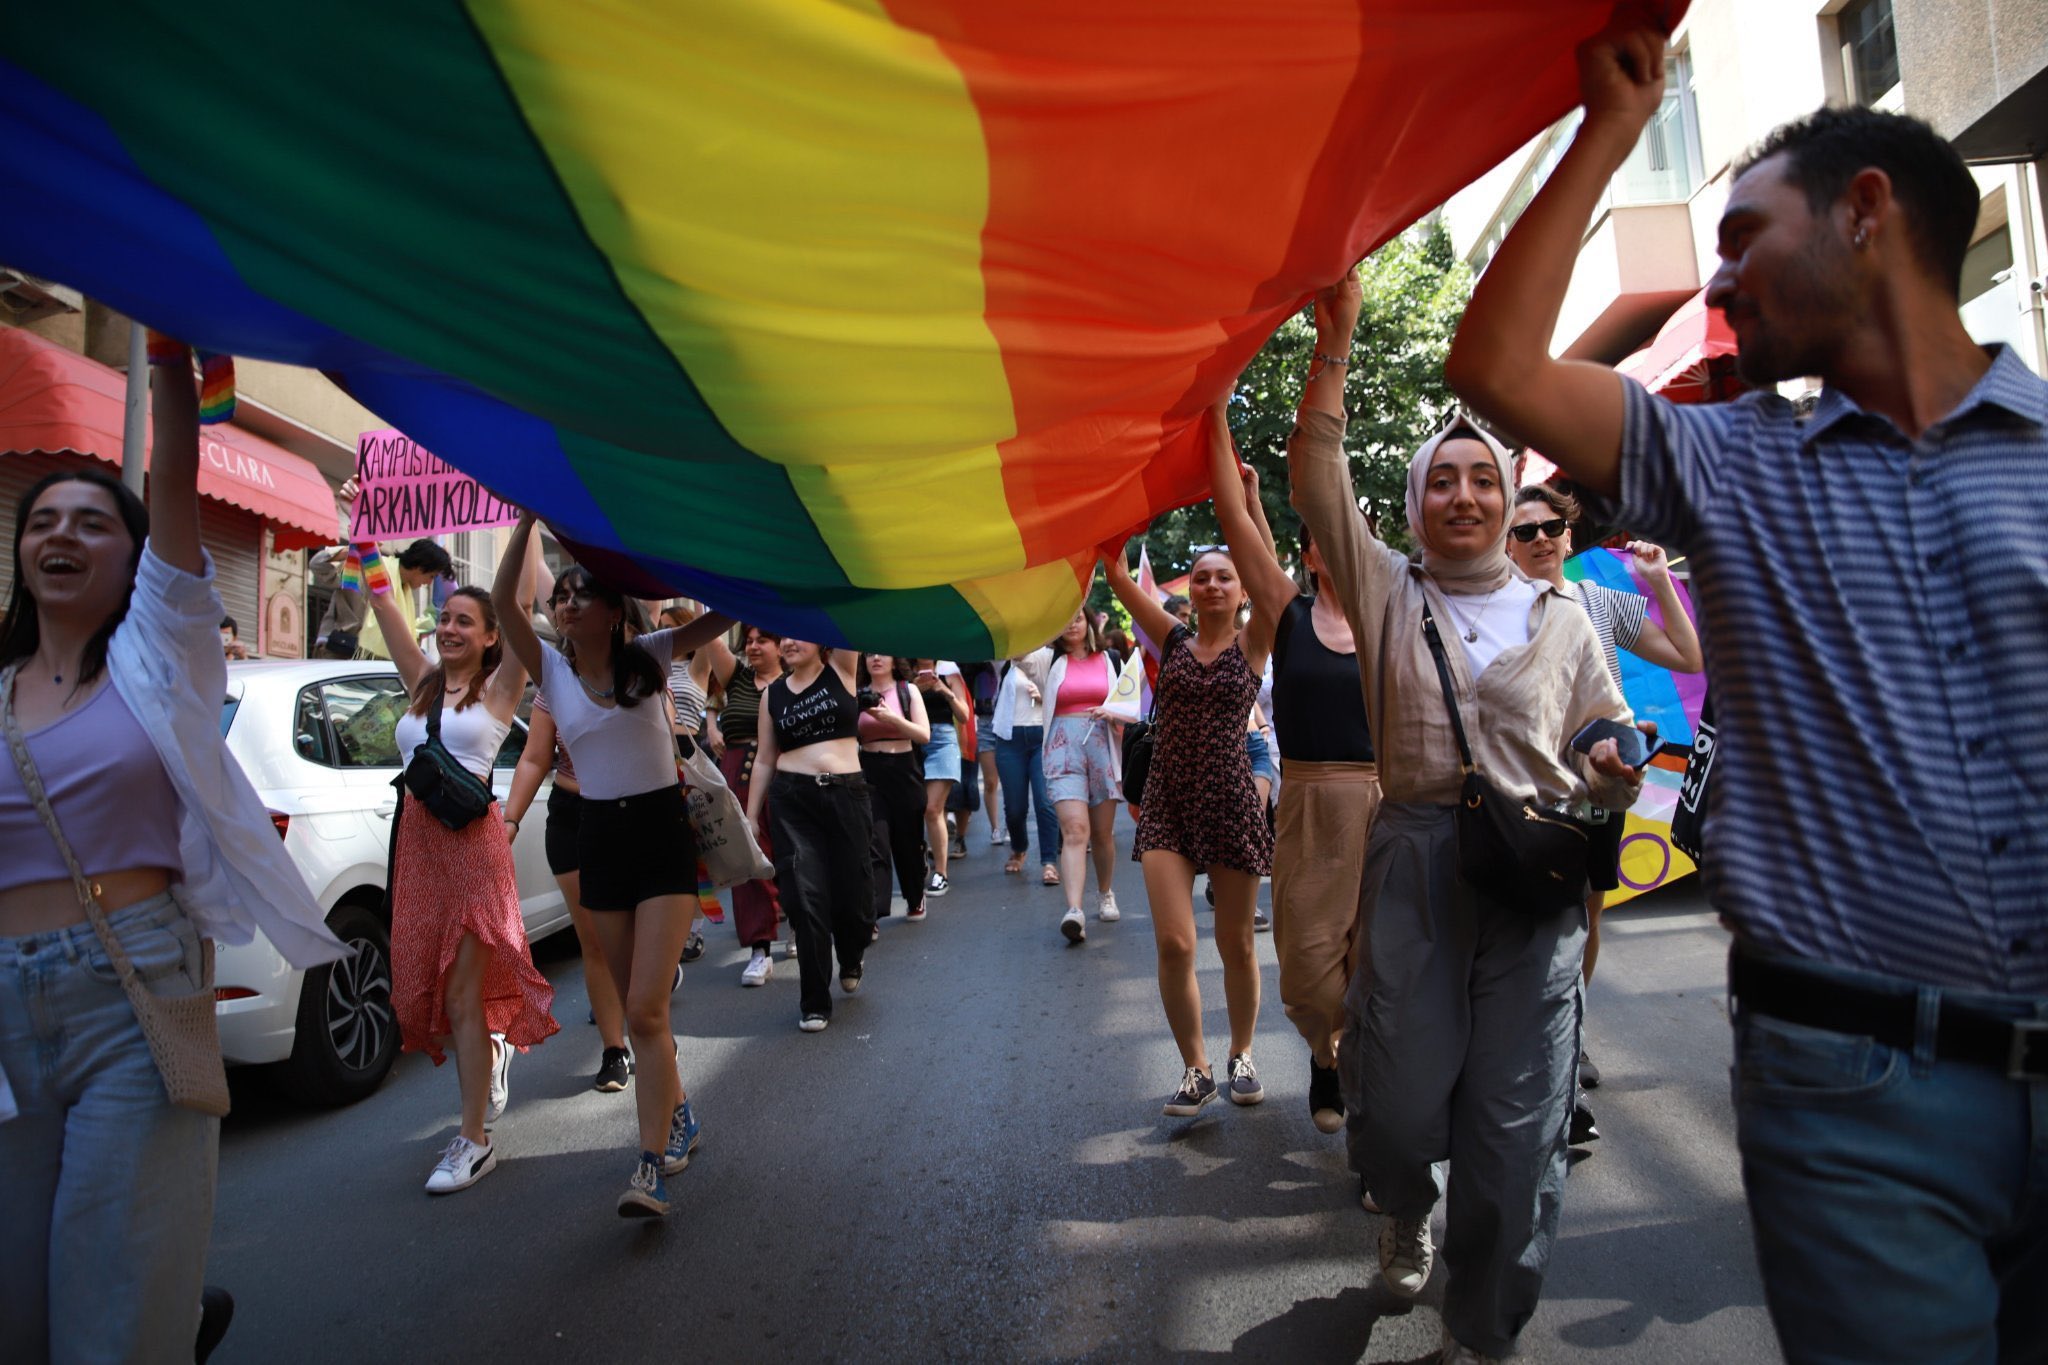 Homofobik nefret söyleminin Temmuz seyri: “LGBT paçavrası, terörü, sapkınlığı” | Kaos GL - LGBTİ+ Haber Portalı Haber